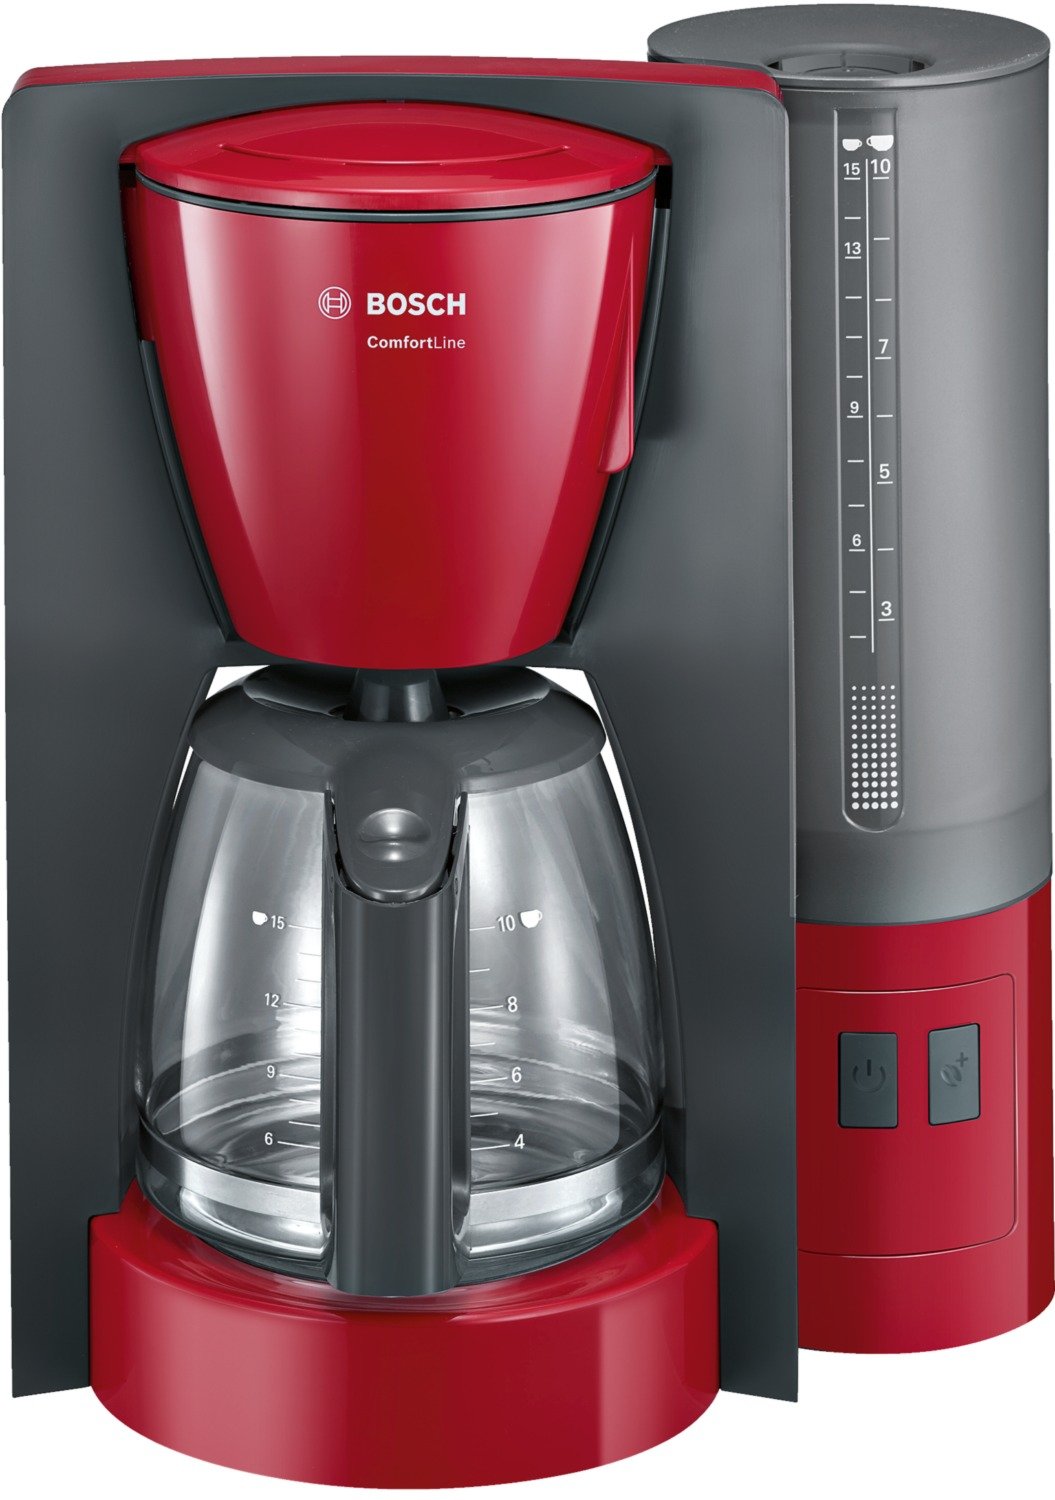 Bosch Comfortline Tka6A044 Coffee Machine, Aroma Protection Glass Jug, Auto